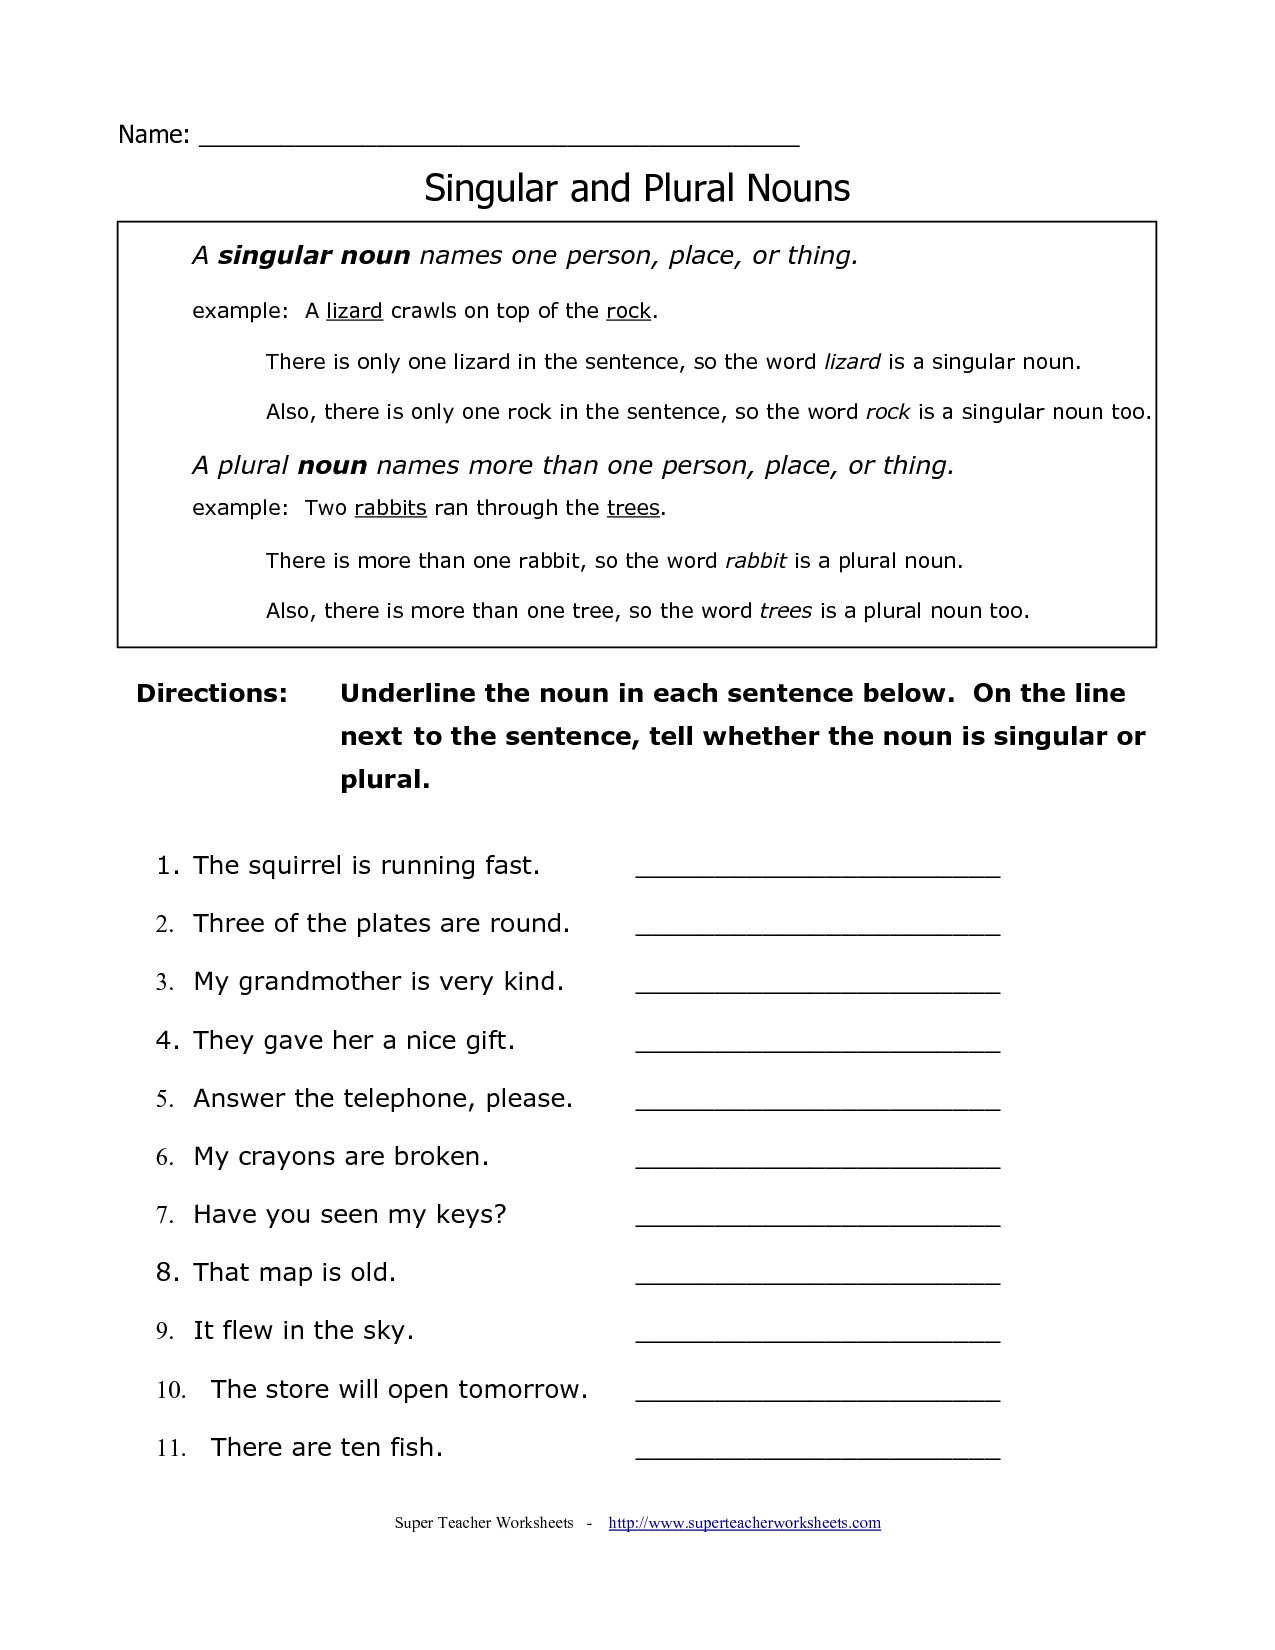 Plural Nouns Worksheets 3rd Grade Image